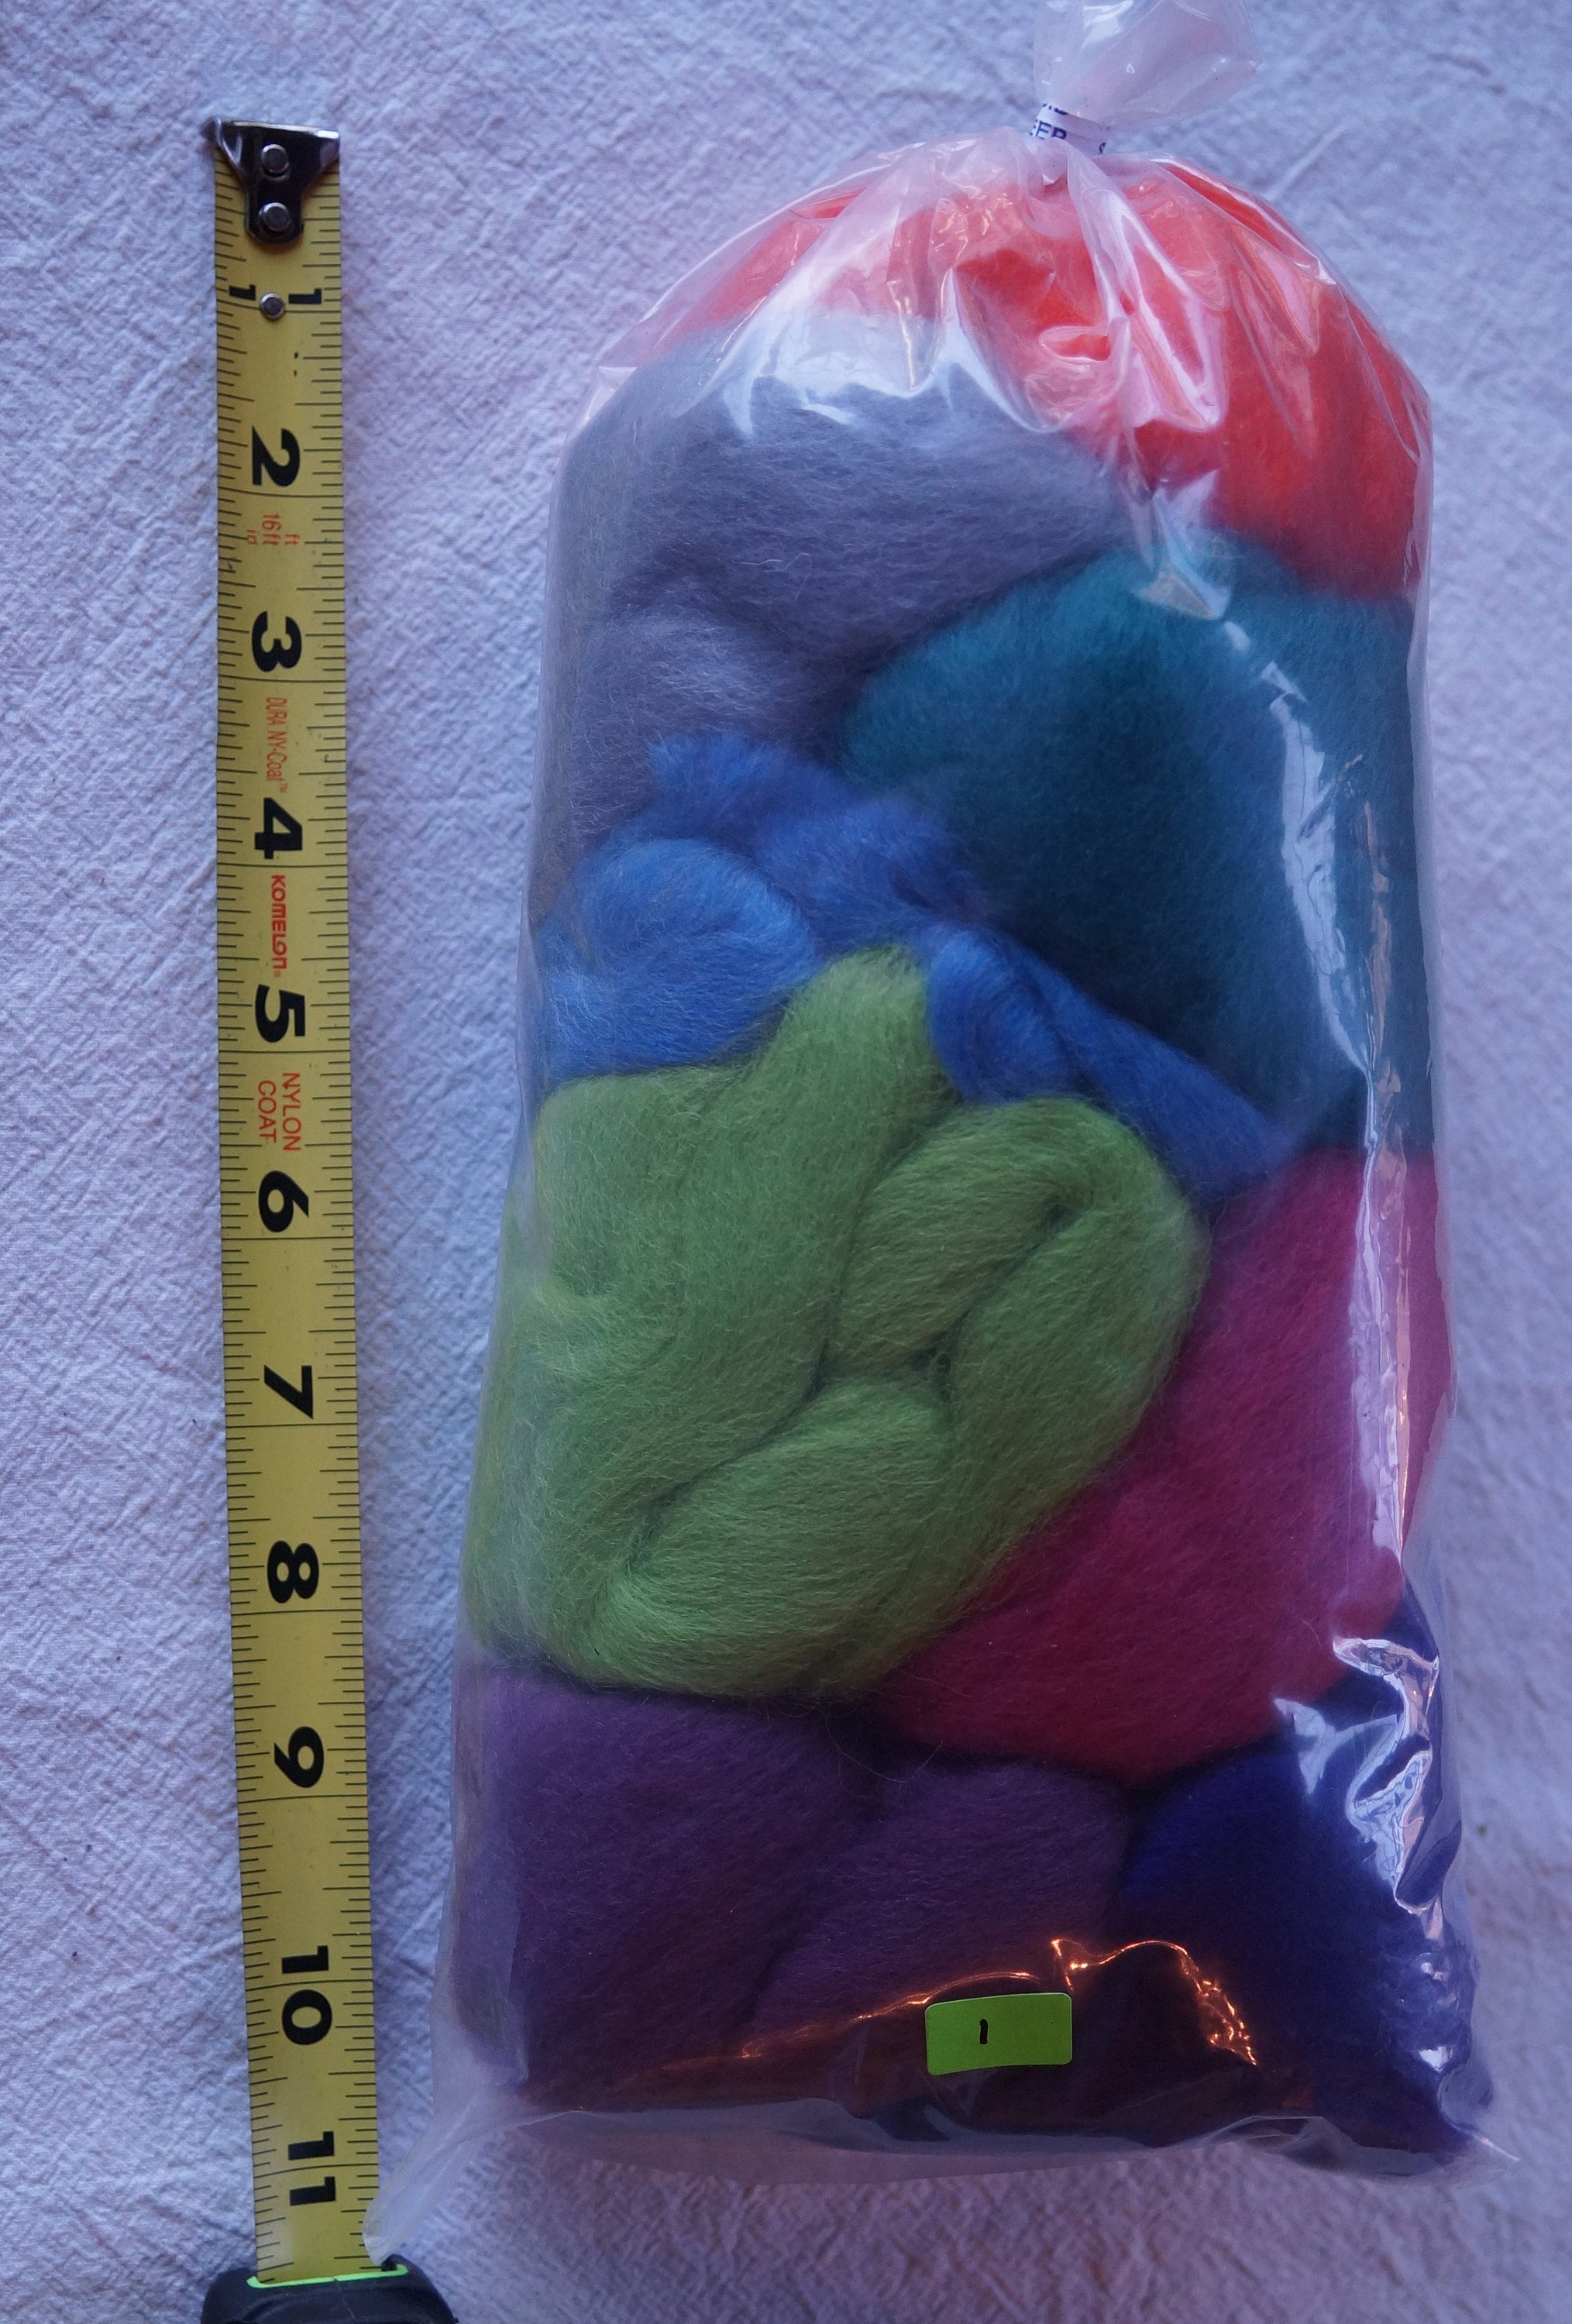 Corriedale wool roving from Ashford, multi color fiber packs for spinning  or felting, free shipping offer